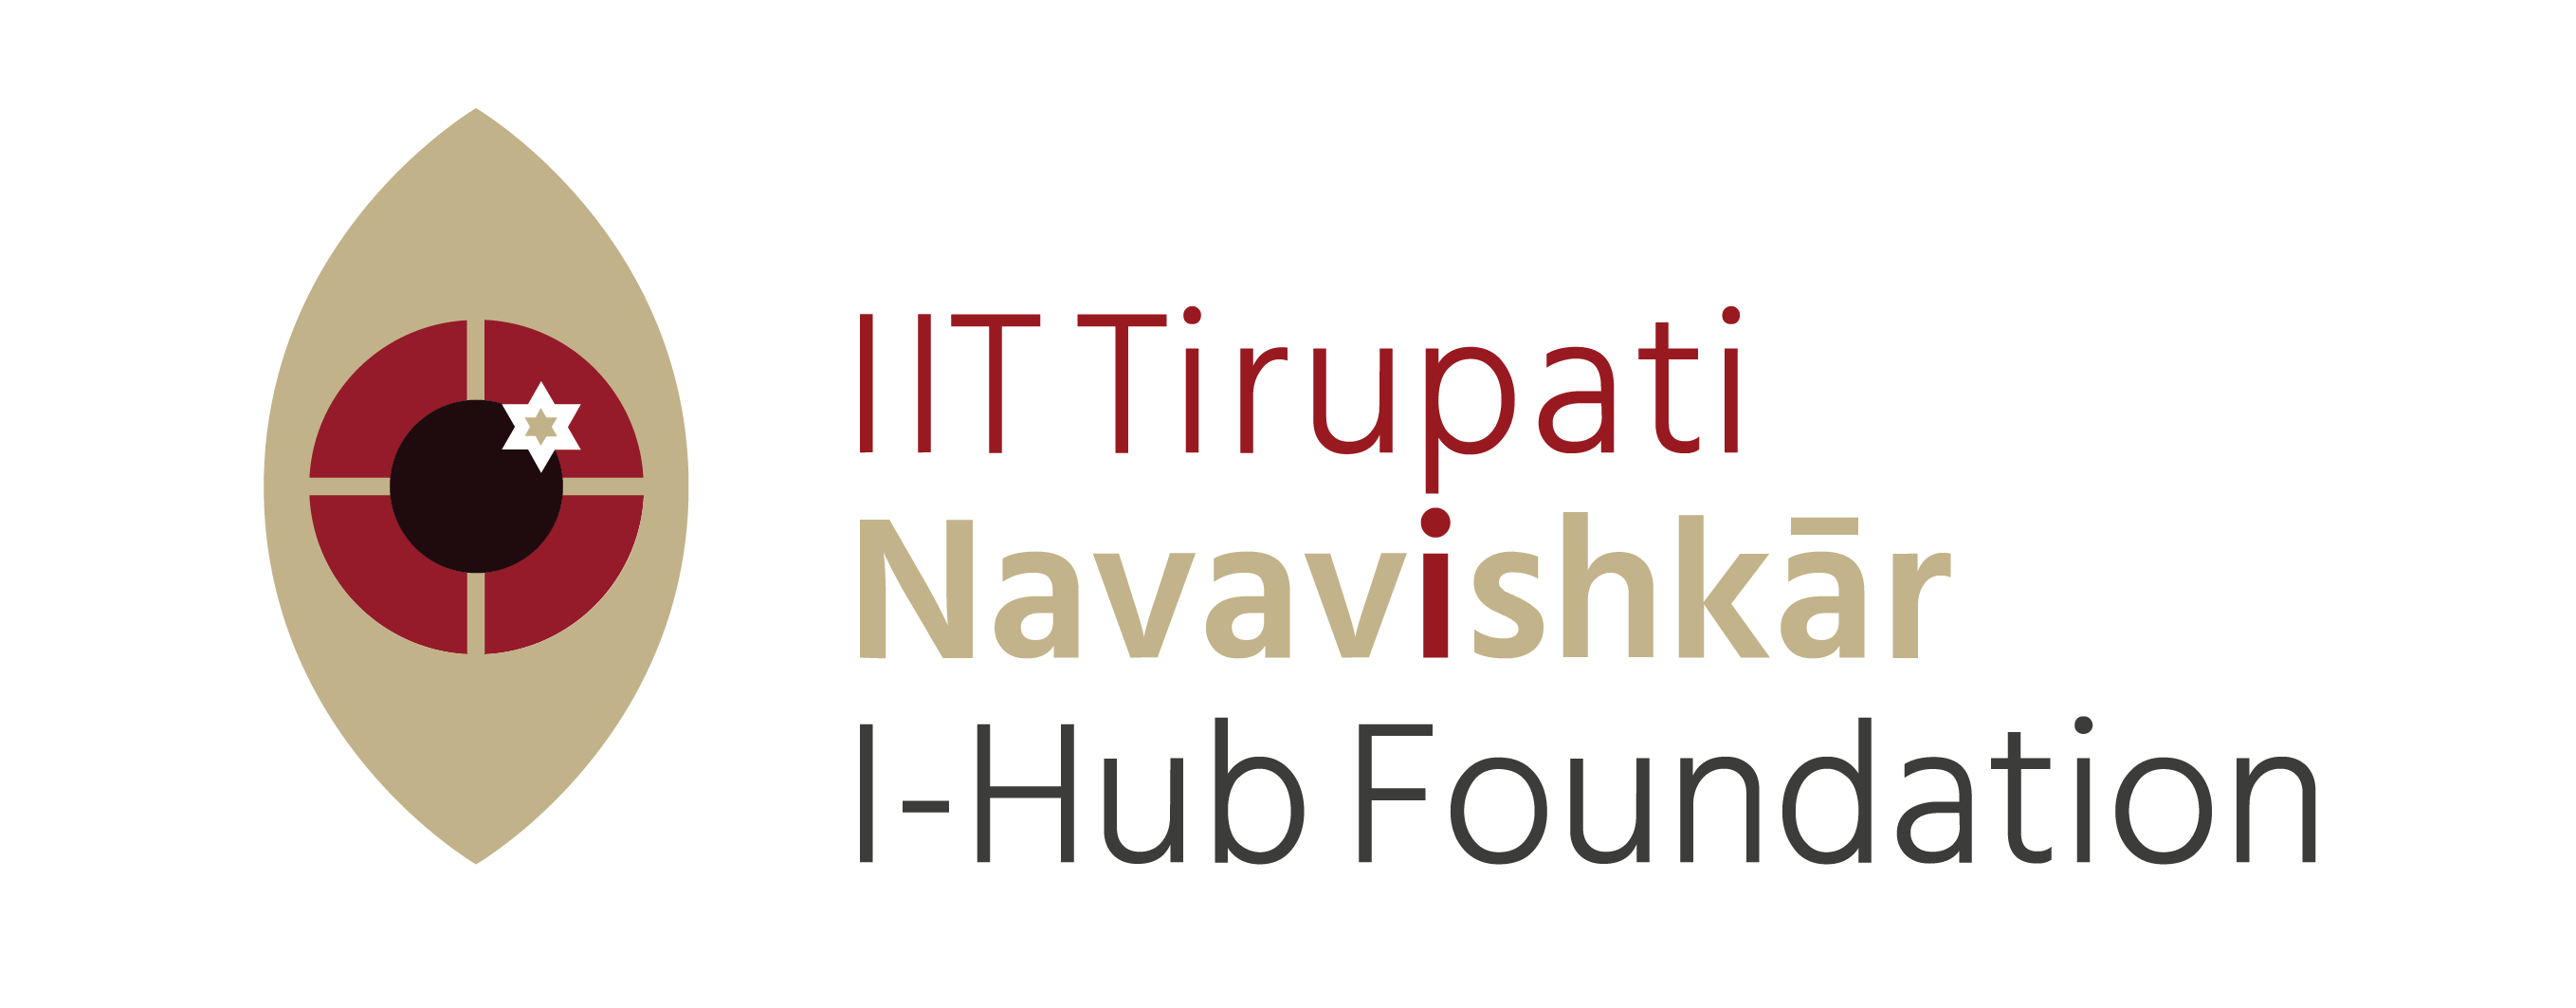 IIT Tirupati Navavishkar I-Hub Foundation (IITT NiF)Education and LearningDistance Learning CoursesAll Indiaother